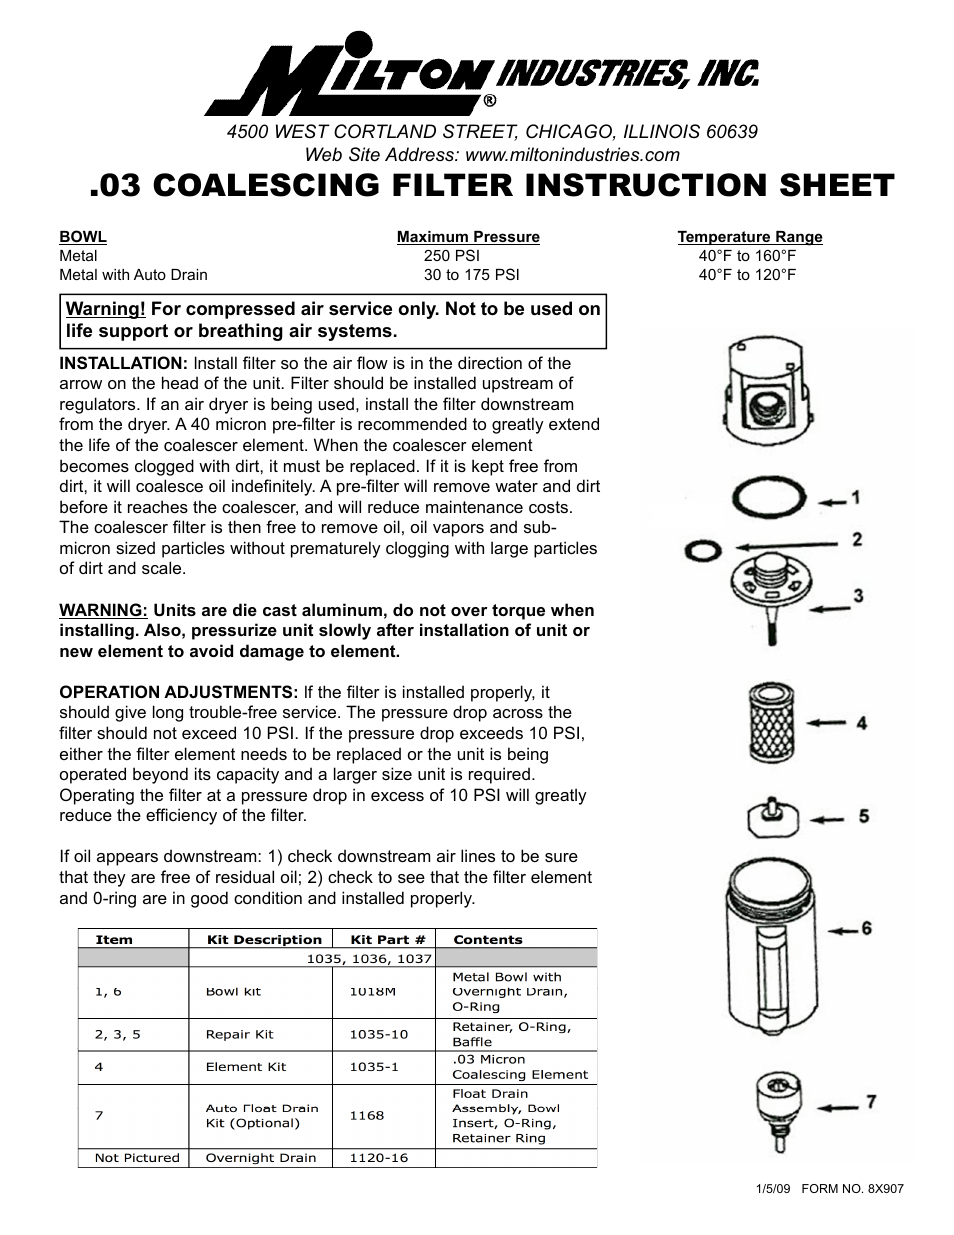 Filter 1037 (Coalescing) - Form 8X907